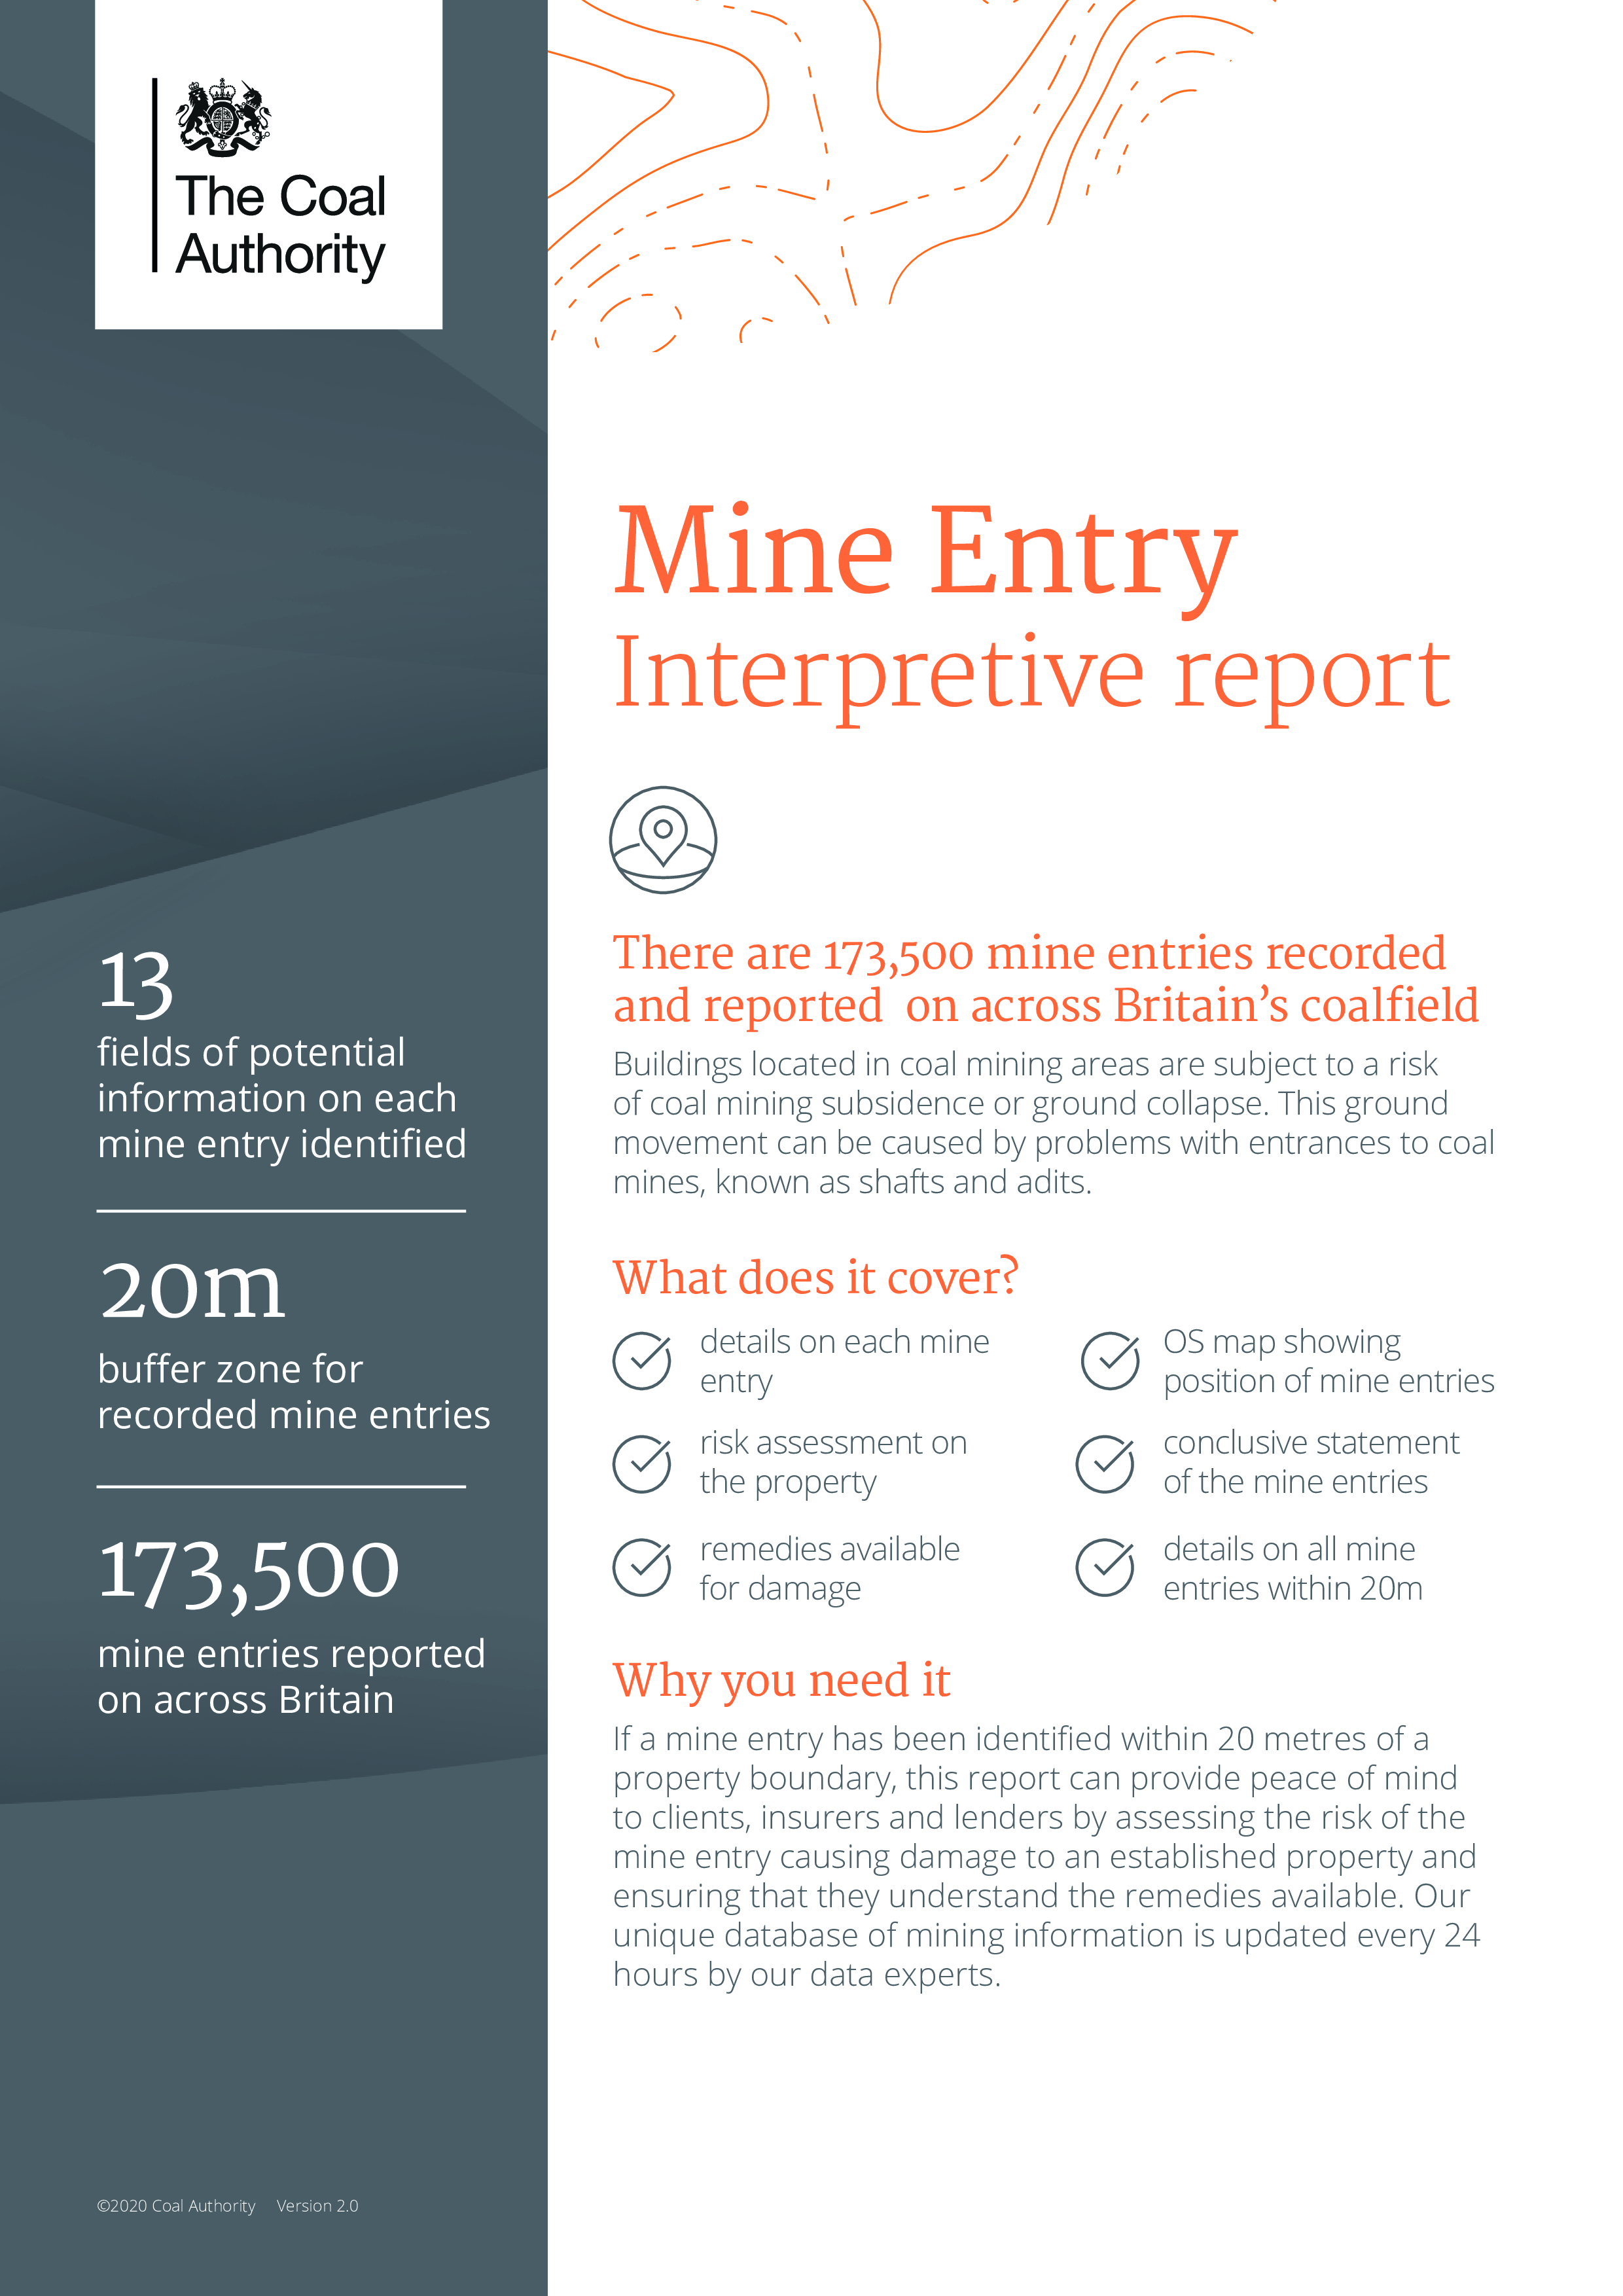 Coal Authority Mine Entry Interpretive Report Image